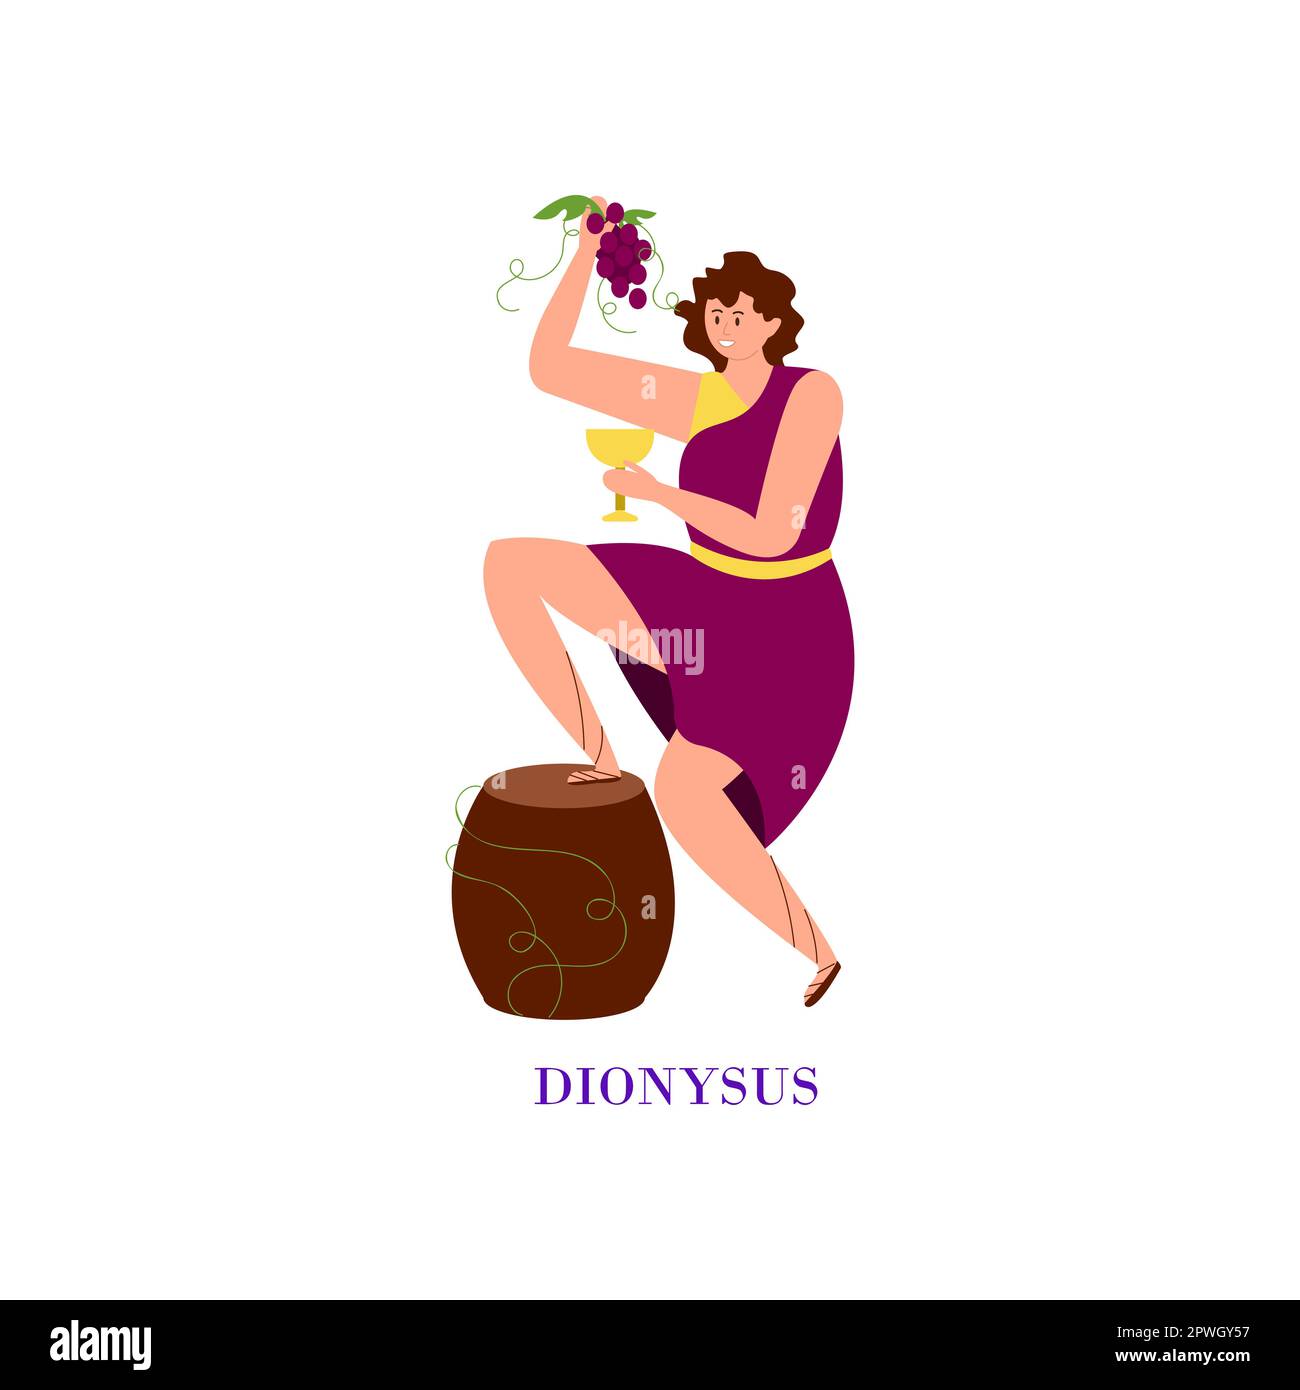 Ancient Greek god Dionysus cartoon illustration Stock Vector